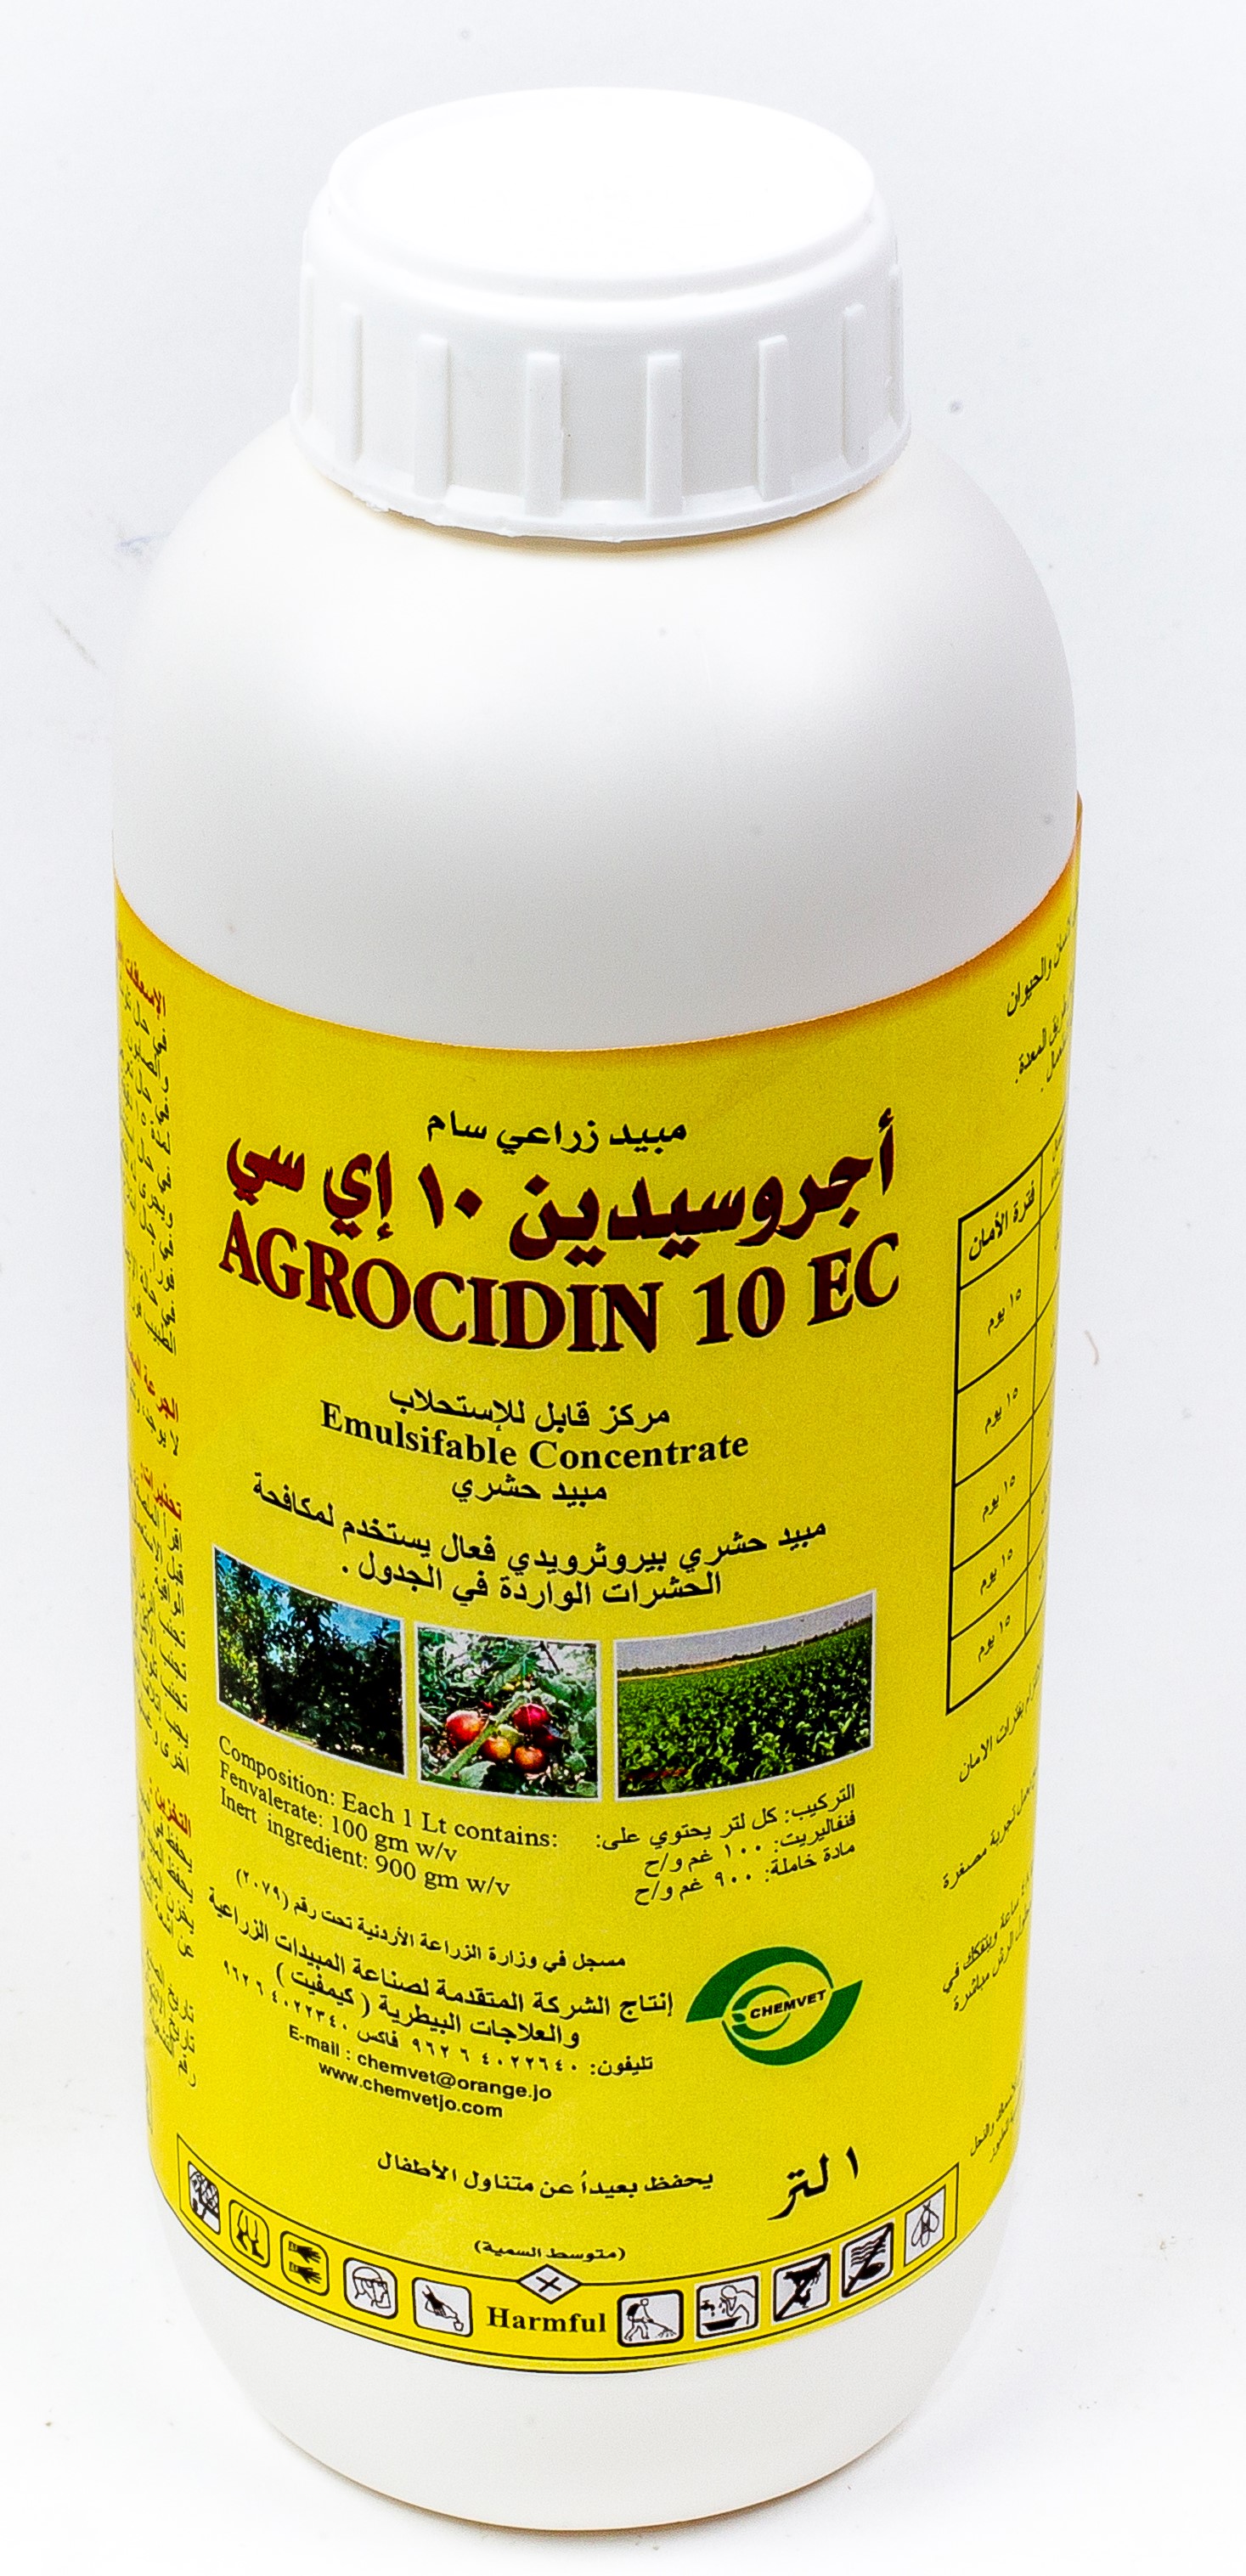 Agrocidin 10 EC